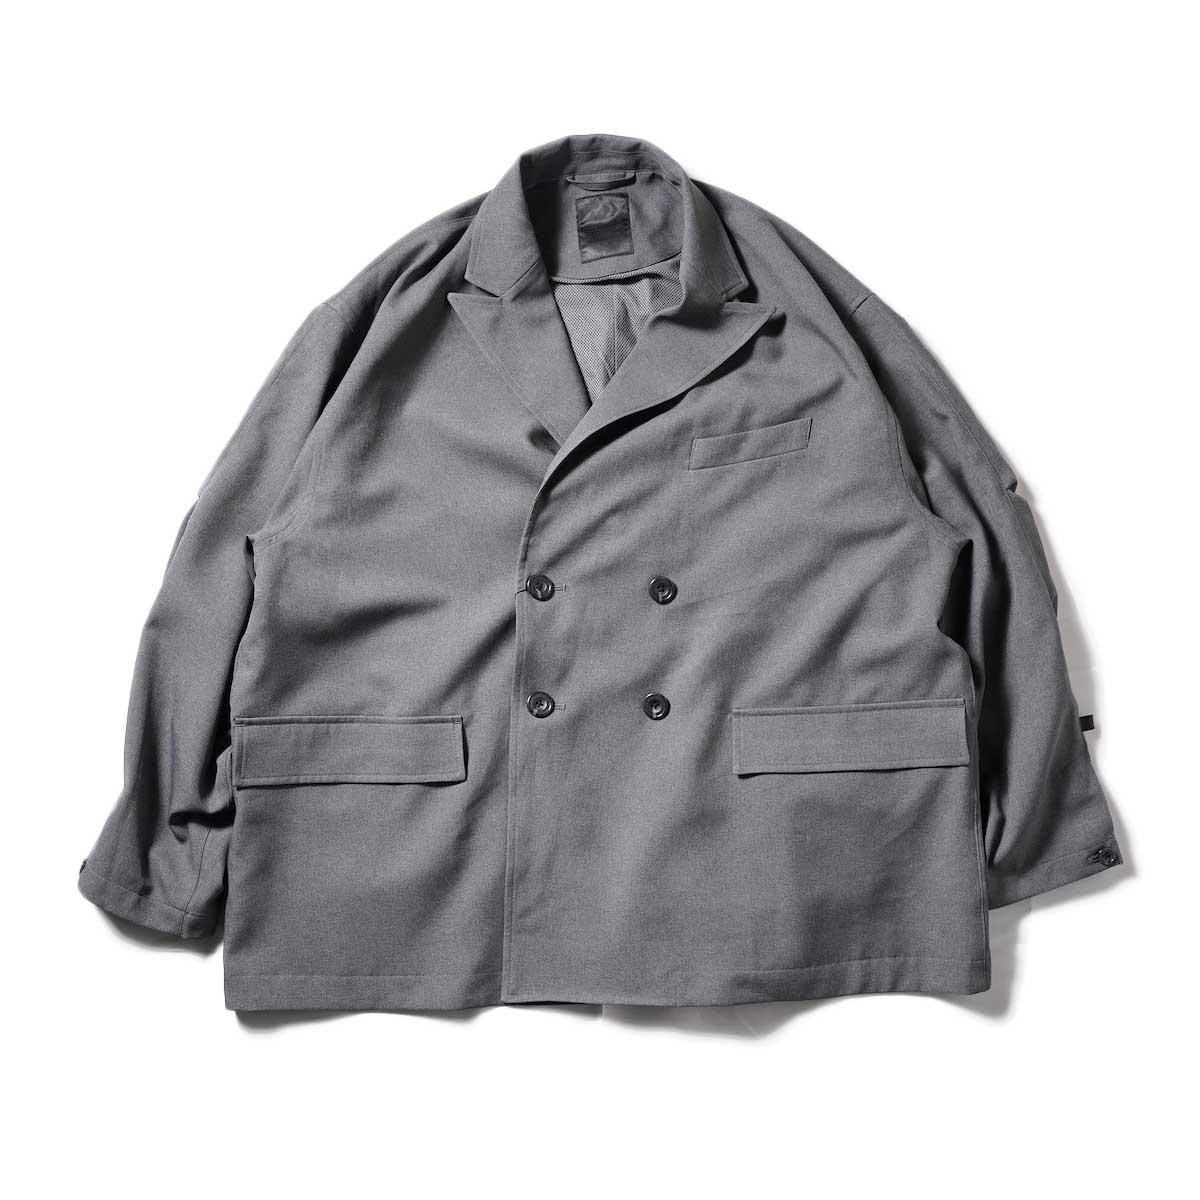 DAIWA PIER39 / Tech Double-Breasted Jacket (Gray)